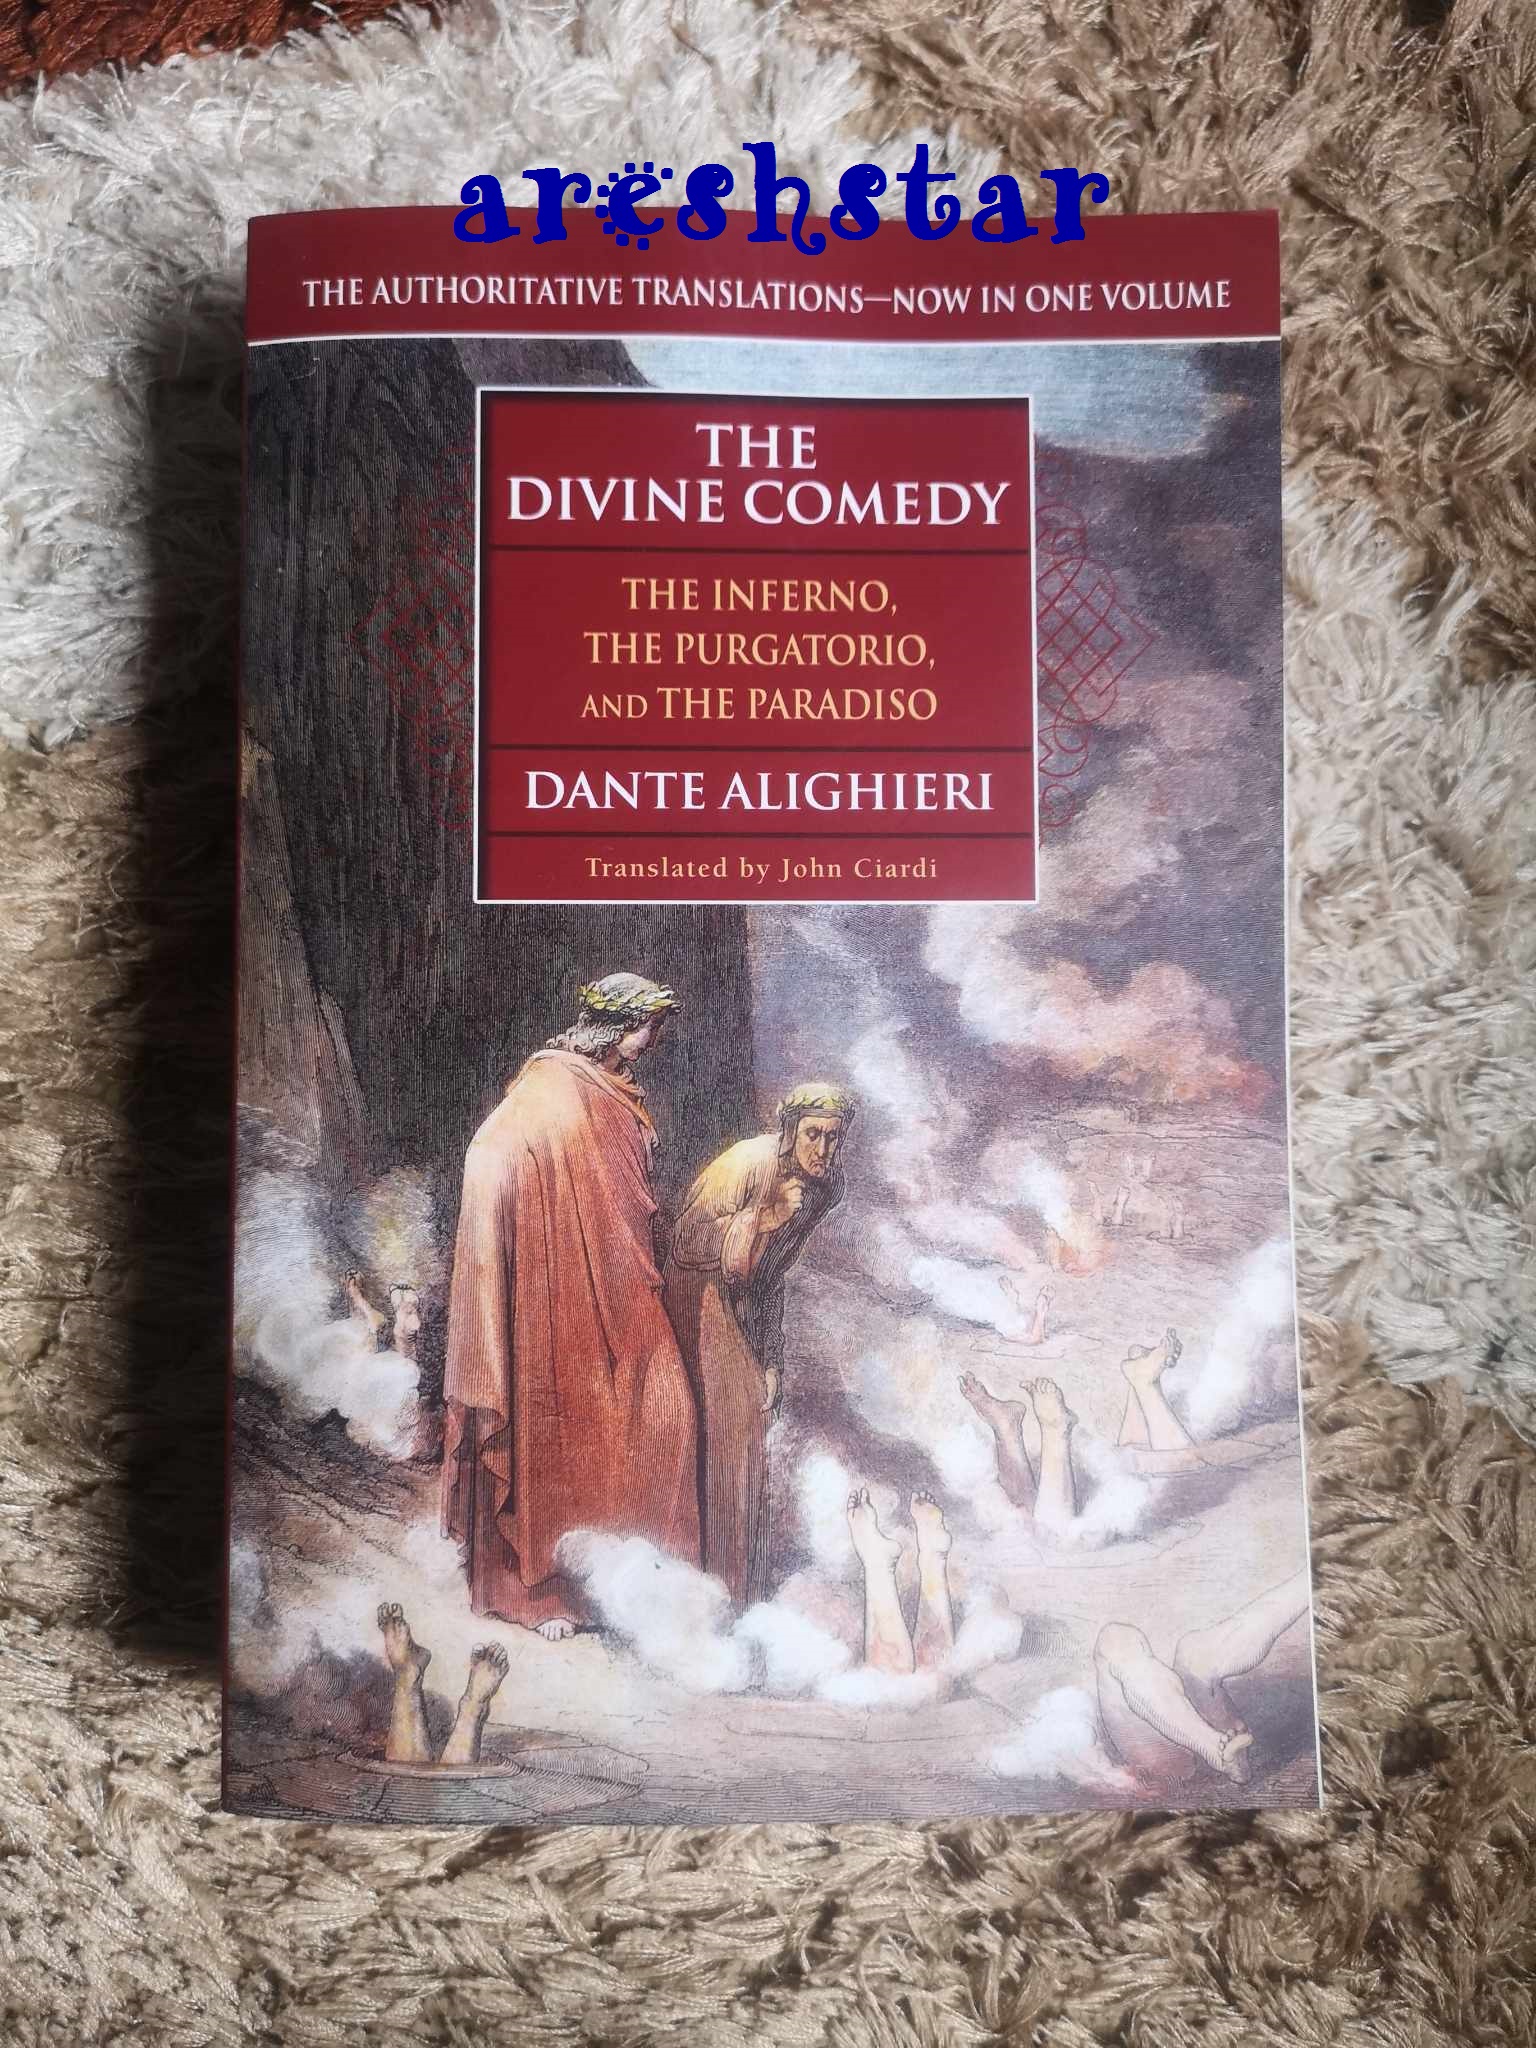 John　and　Lazada　Comedy　Paradiso)　Translated　Dante　Ciardi　by　The　by　The　The　The　Divine　Purgatorio　Inferno,　Alighieri　PH